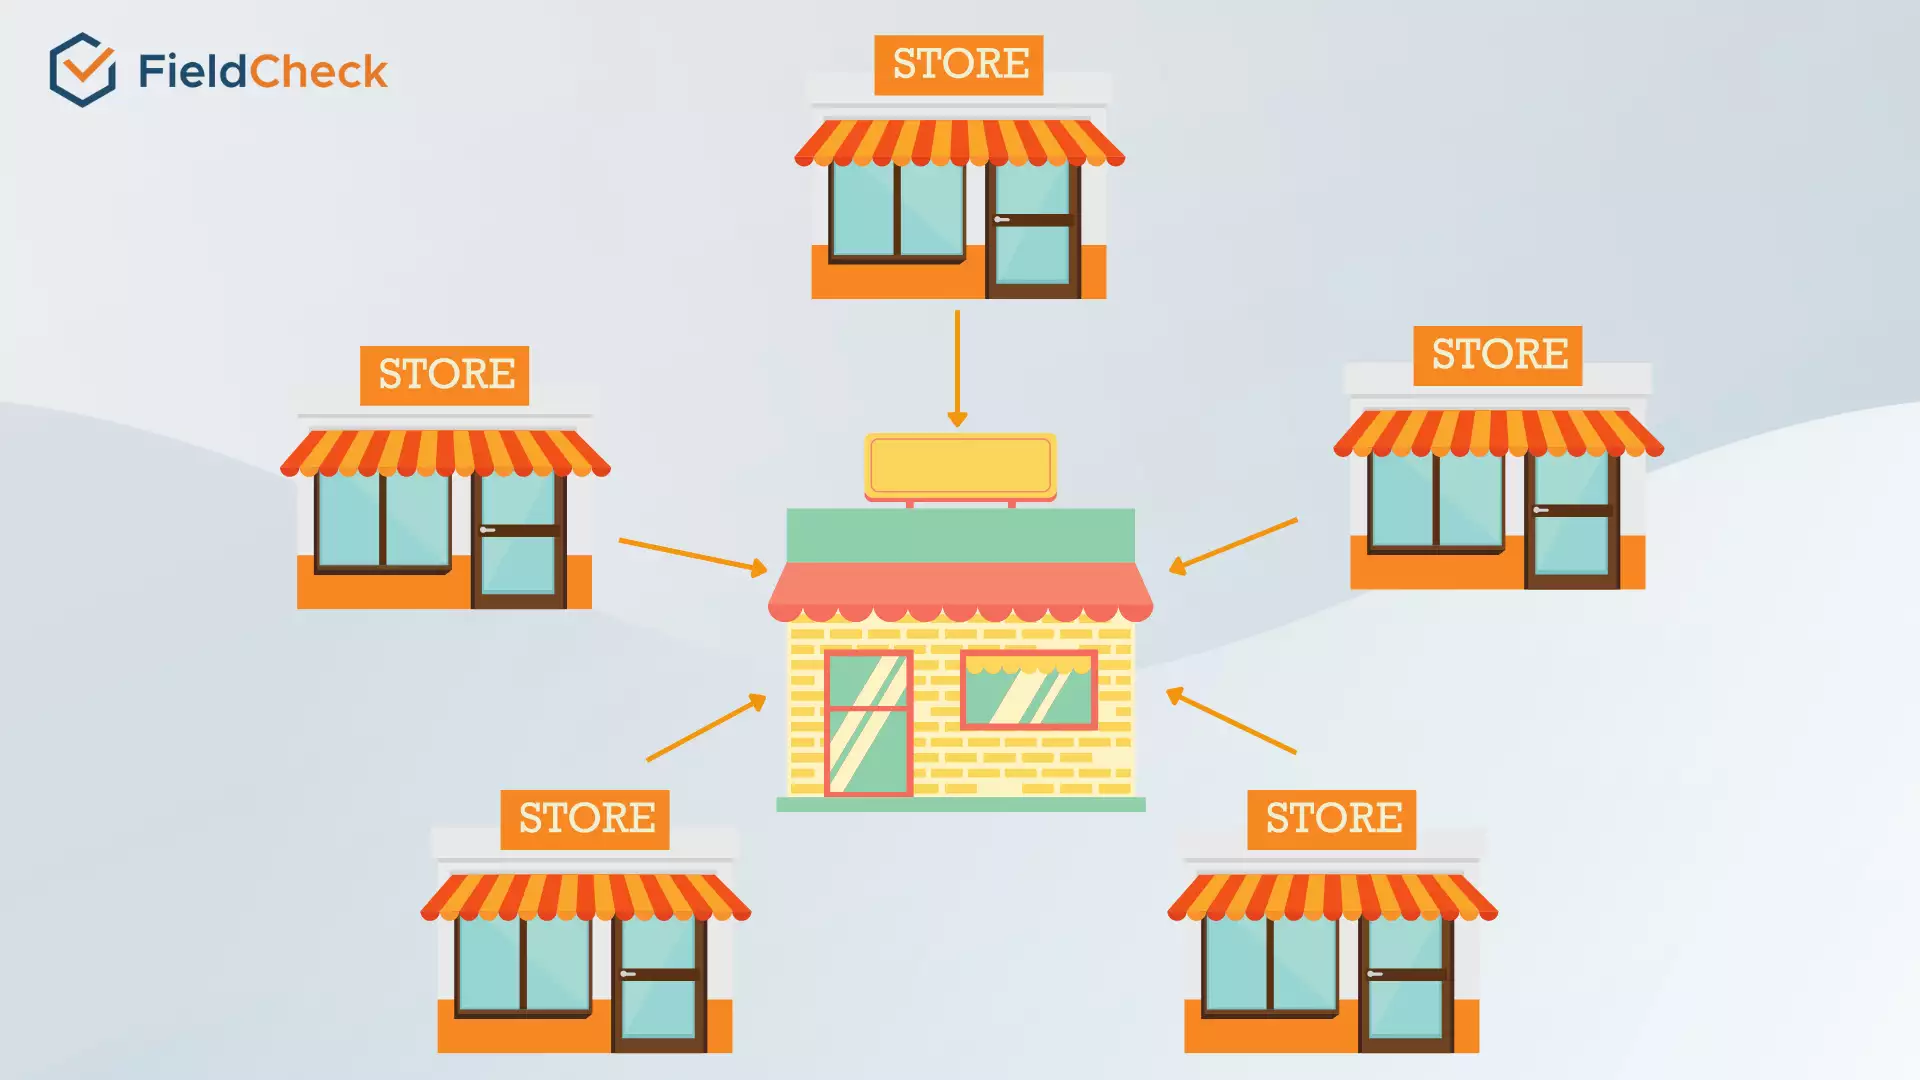 Retail Chain Store Management Model